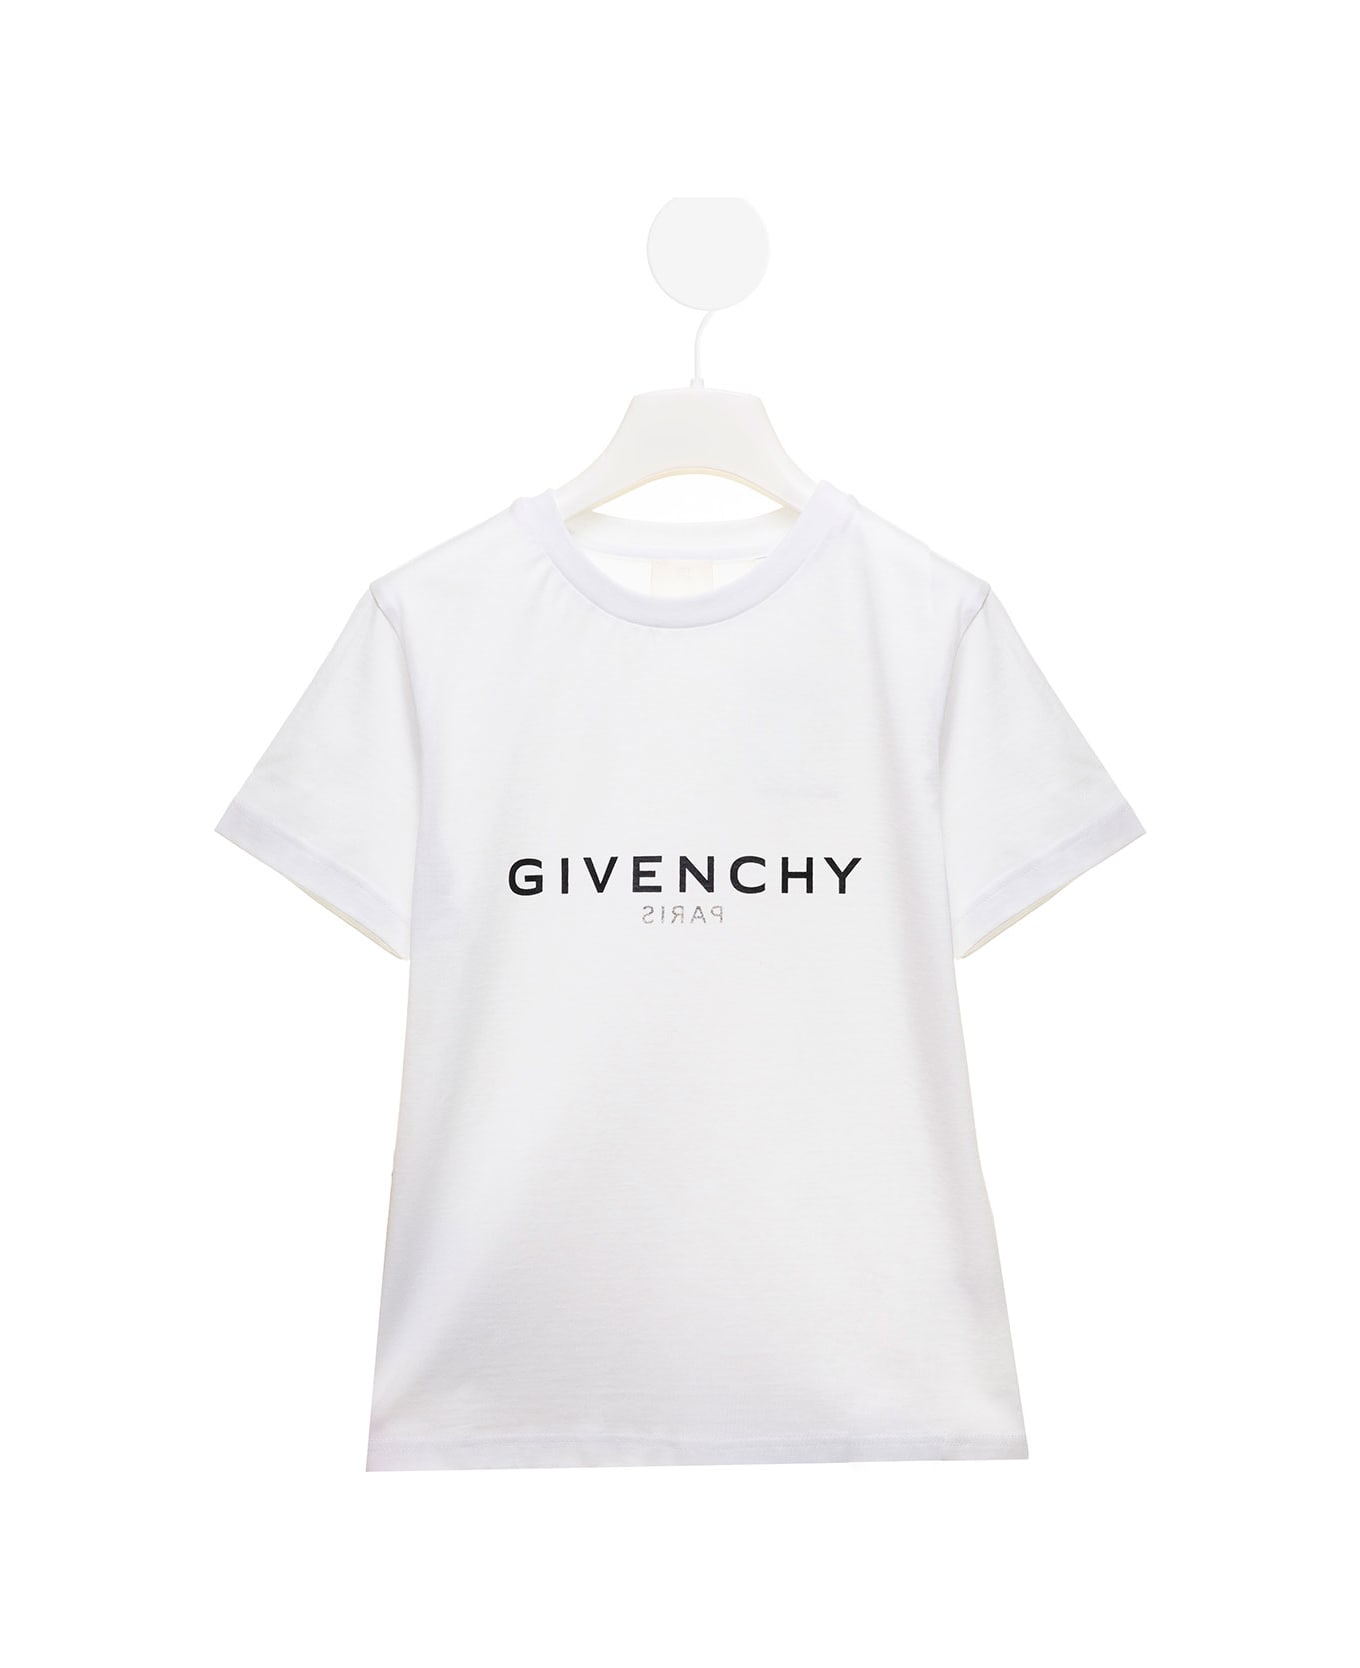 Givenchy Logo Printed White Cotton T-shirt Boy Givenchy Kids - White